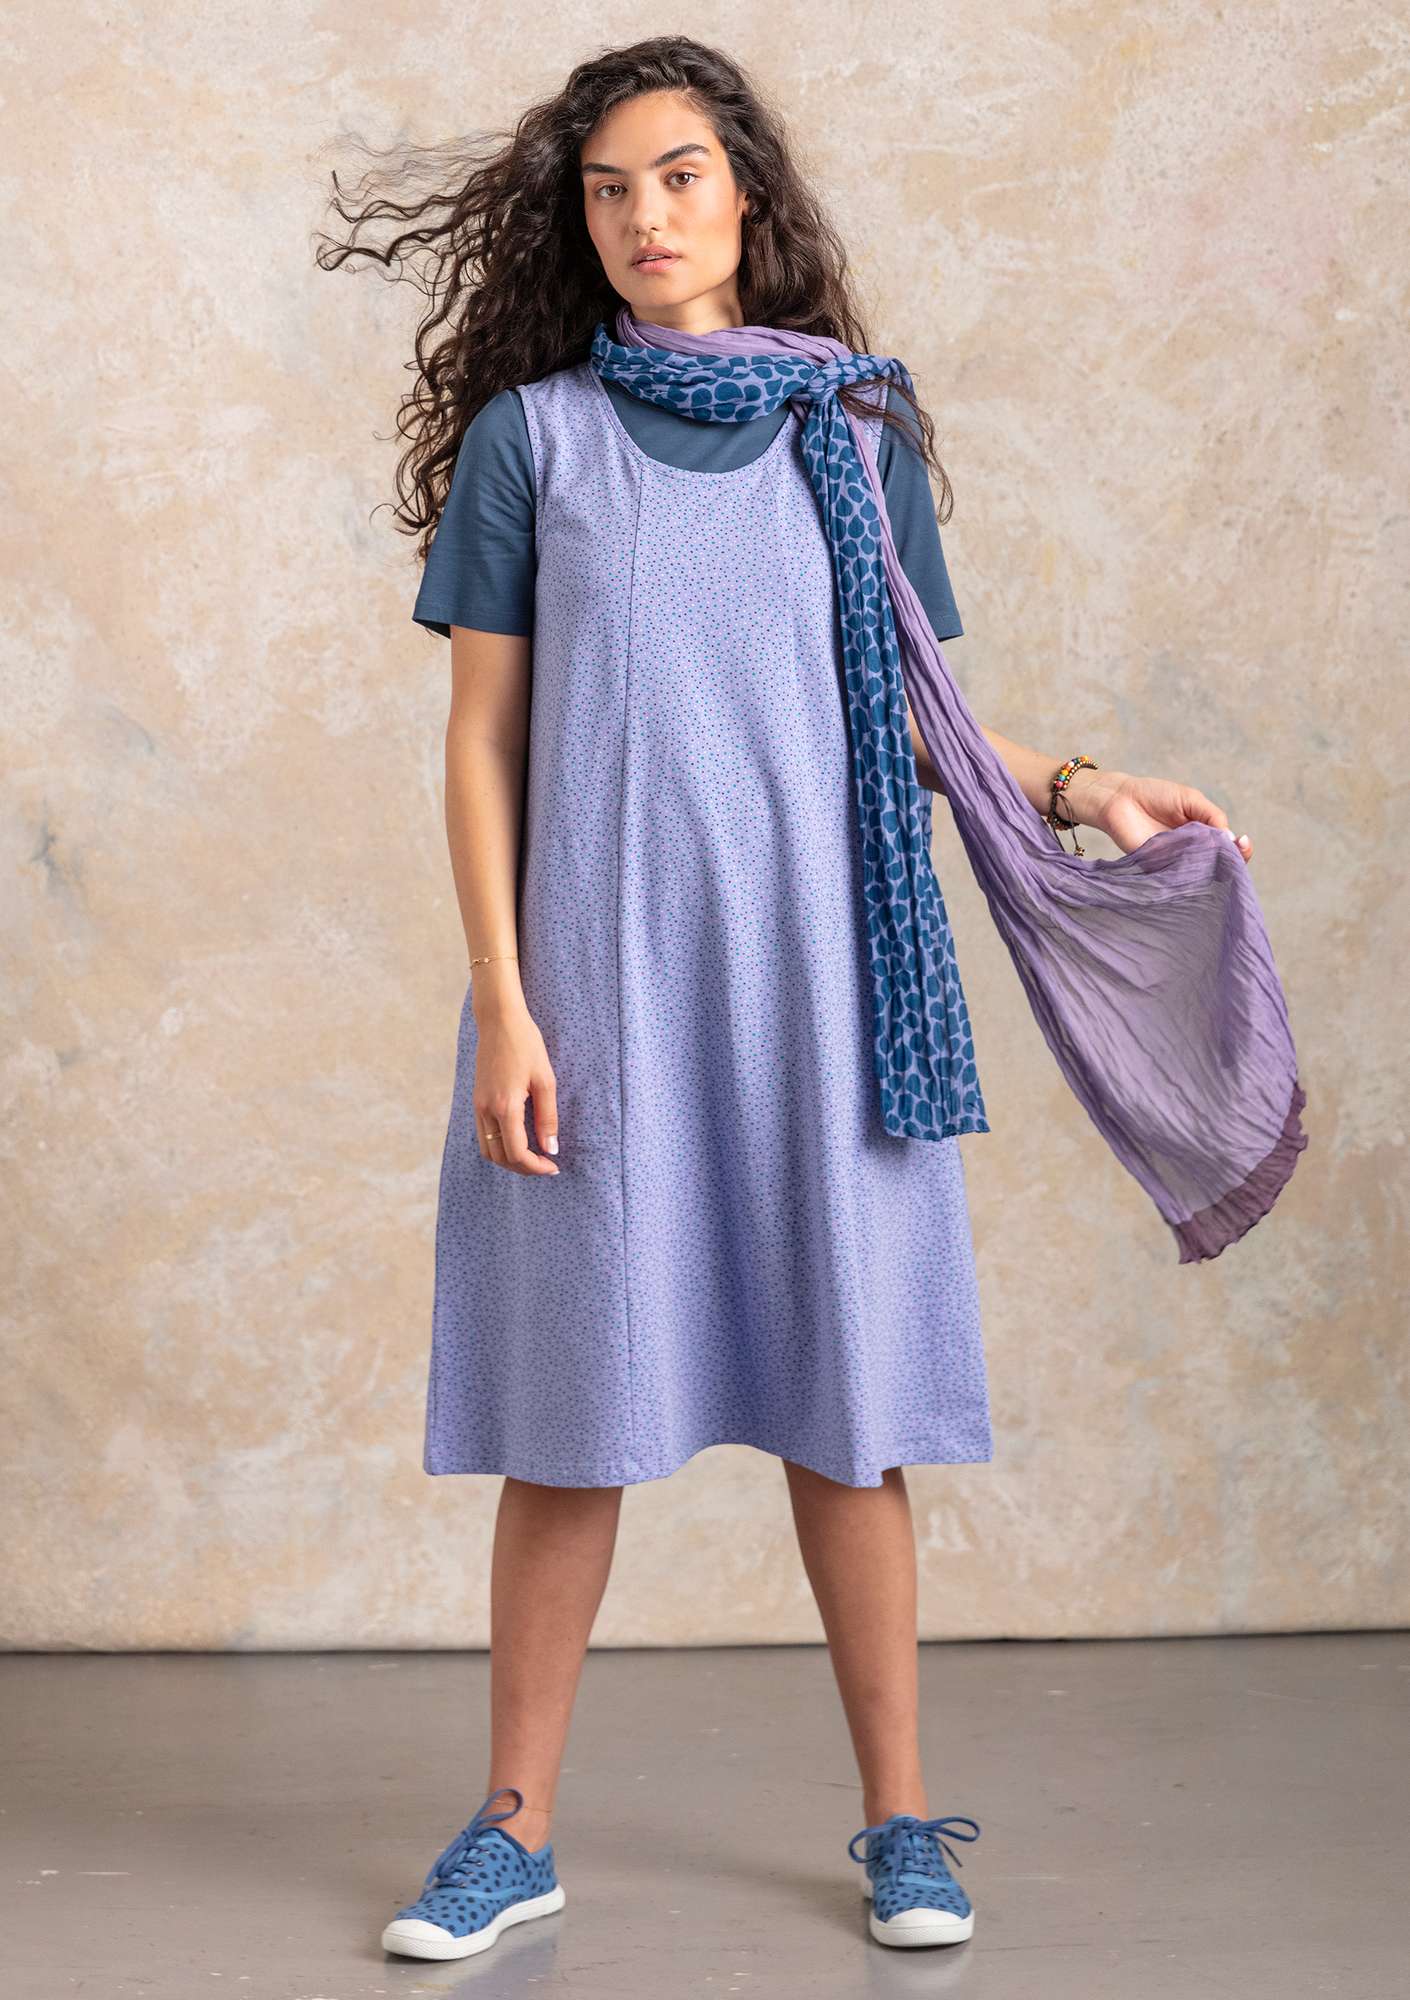 “Iliana” jersey dress in organic cotton/spandex lavender/patterned